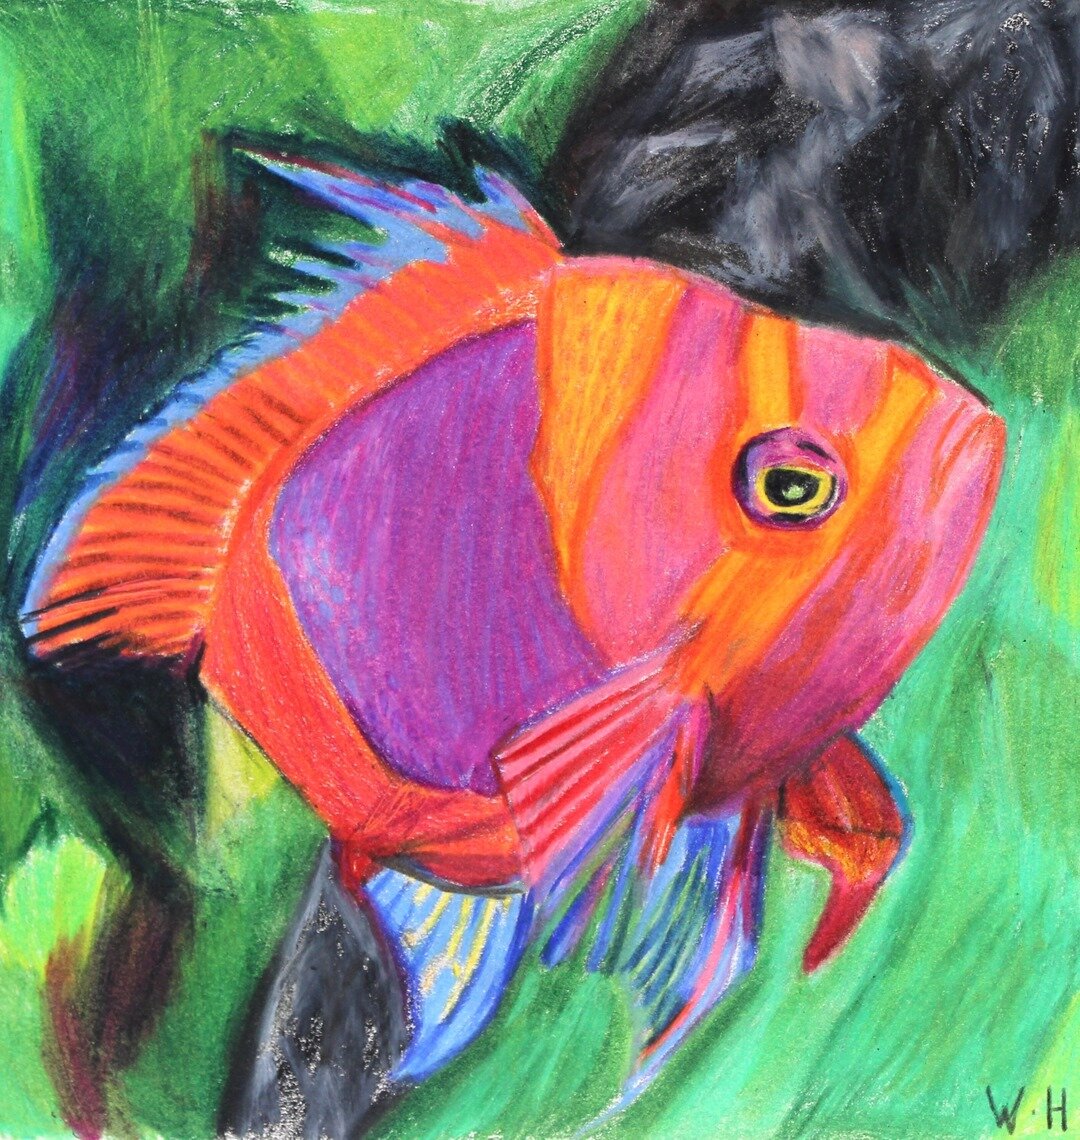 &quot;Deep Blue&quot; Prismacolor Drawing⠀⠀⠀⠀⠀⠀⠀⠀⠀
Artist: Weston Holtby, age 14⠀⠀⠀⠀⠀⠀⠀⠀⠀
.⠀⠀⠀⠀⠀⠀⠀⠀⠀
.⠀⠀⠀⠀⠀⠀⠀⠀⠀
.⠀⠀⠀⠀⠀⠀⠀⠀⠀
#deepbluesea #fishinthesea #fish #brightcoloredfish #fishart #fishdrawing #prismacolor #prismacolordrawing #drawing #prismacolo